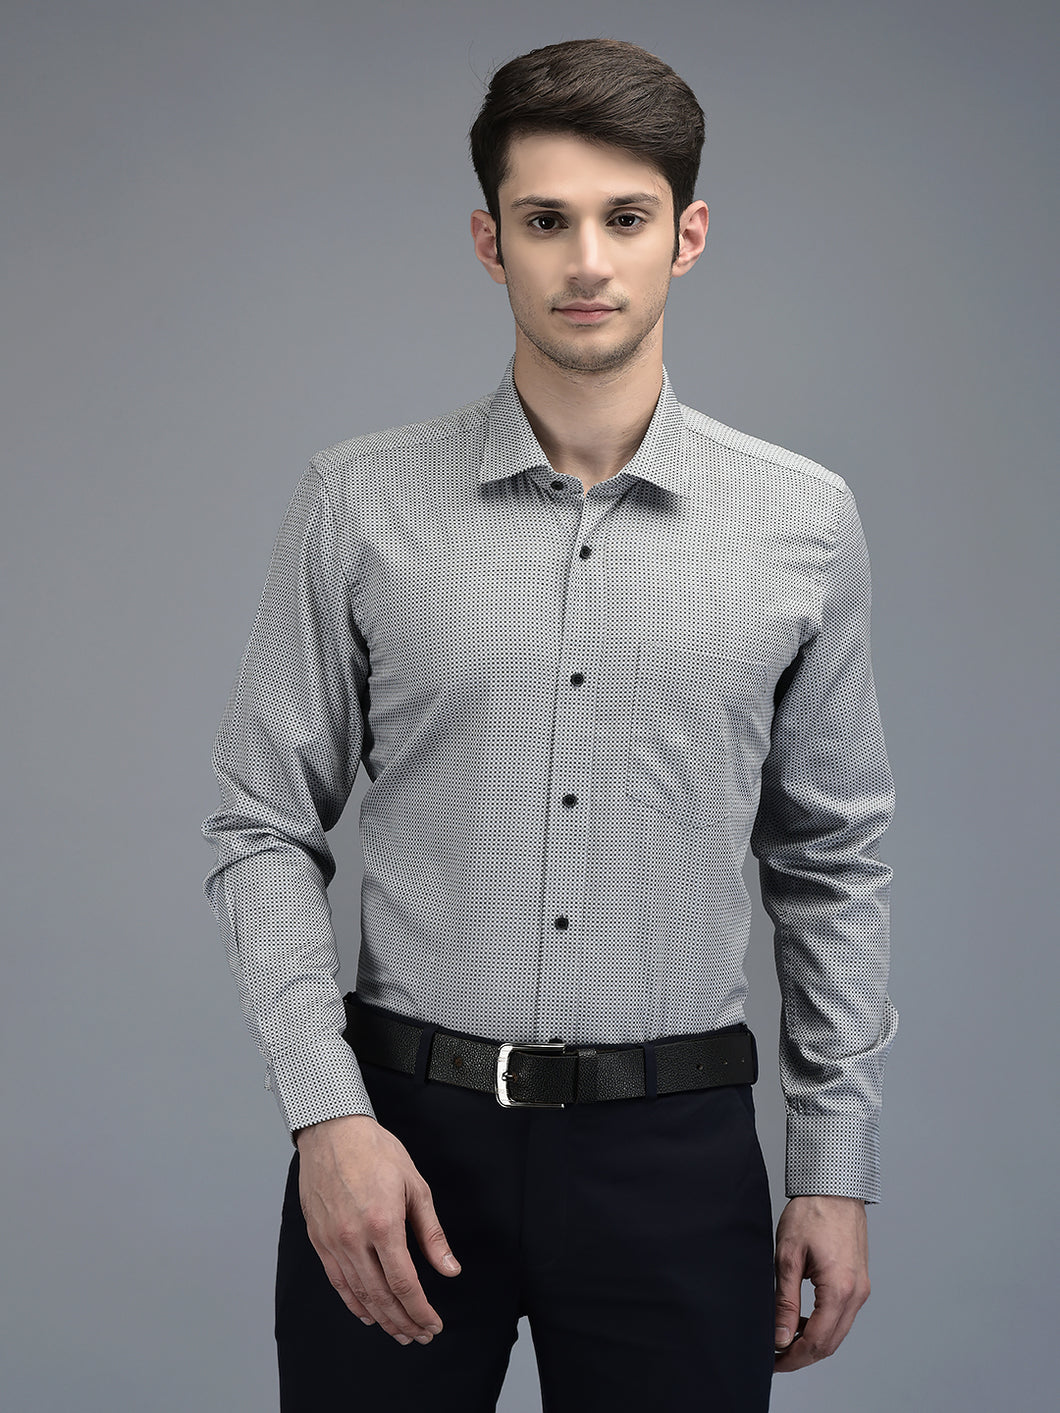 CANOE MEN Formal Shirt Grey Color Cotton Fabric Button Closure